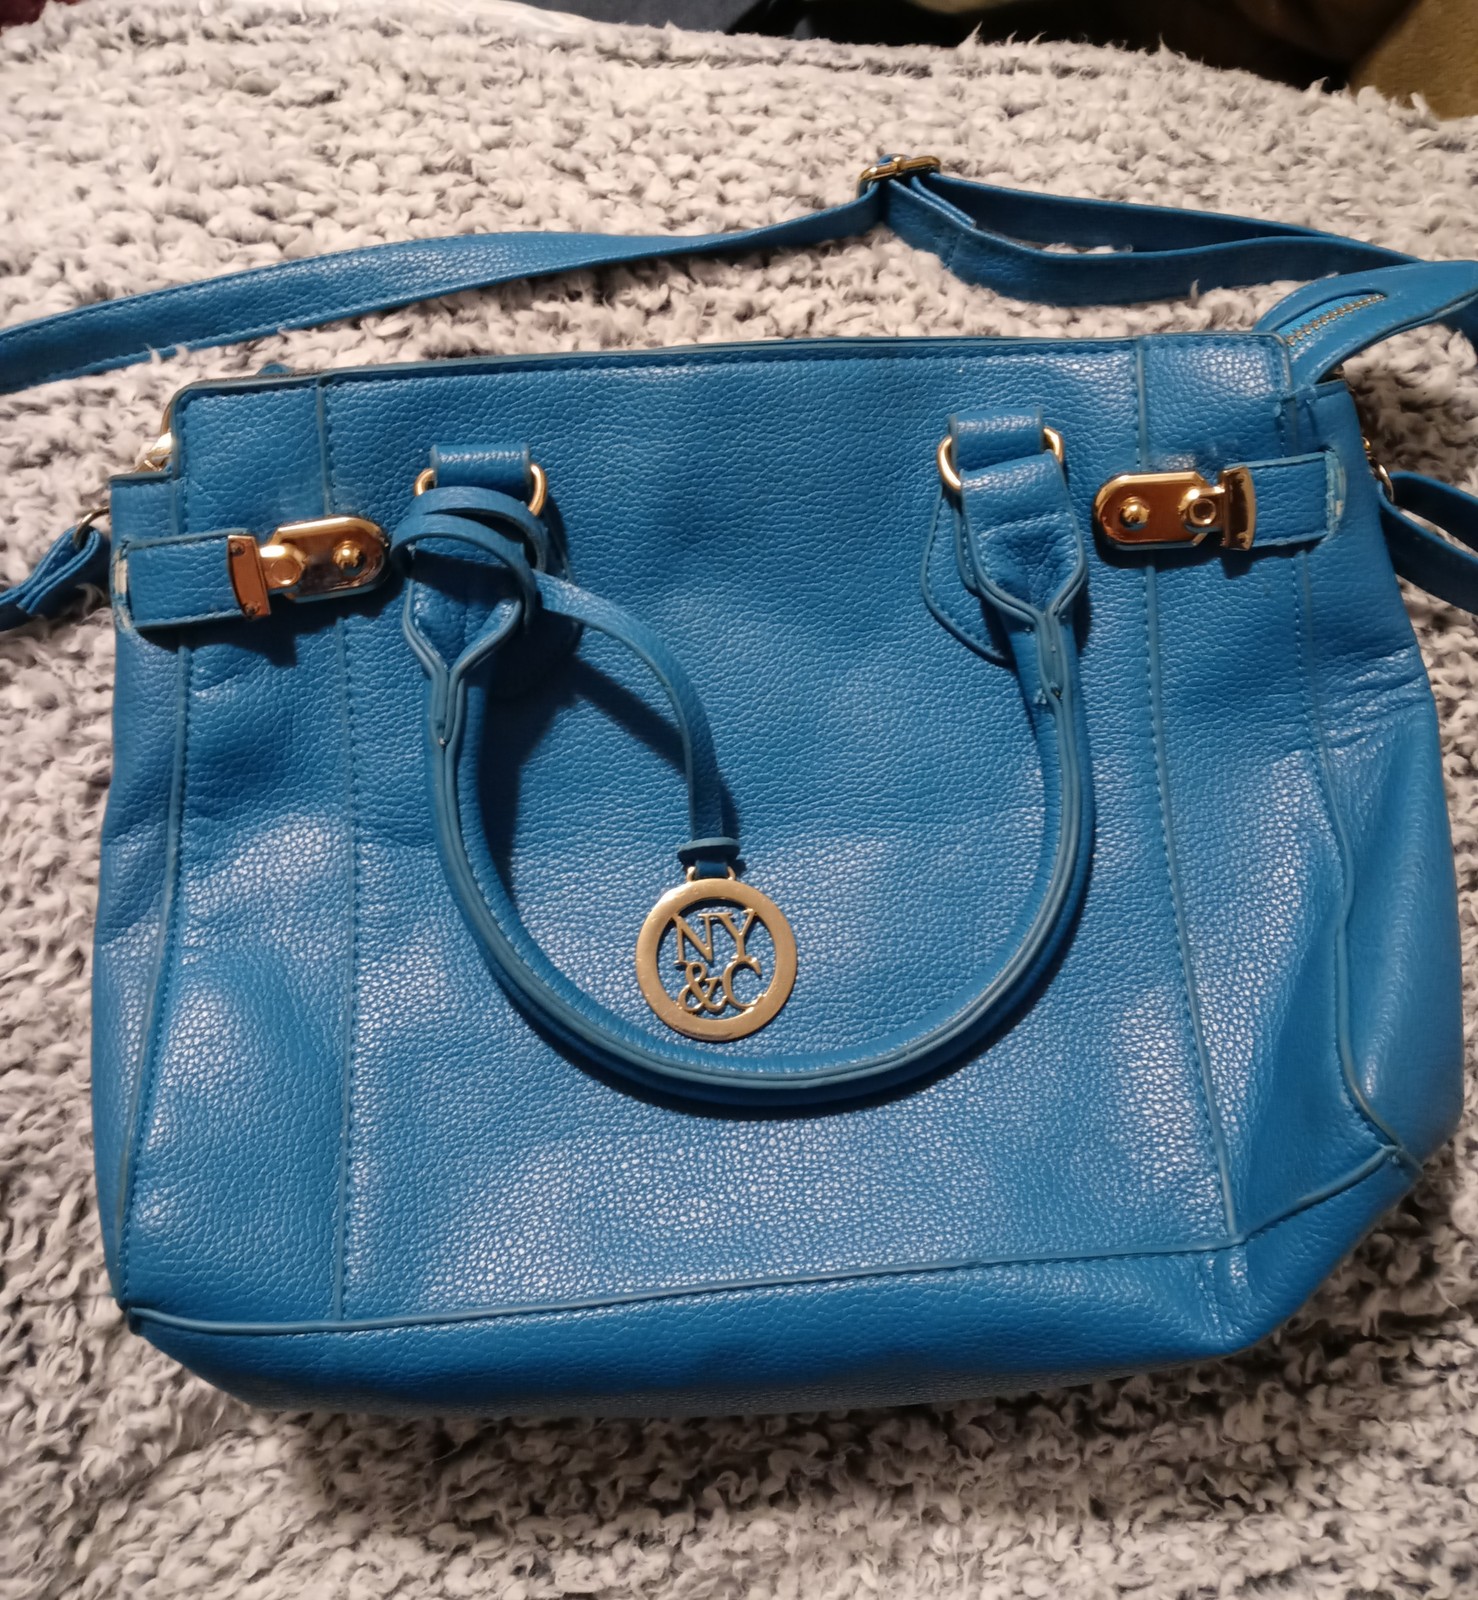 Primary image for NY & CO New York & Co blue handbag crossbody bag tote